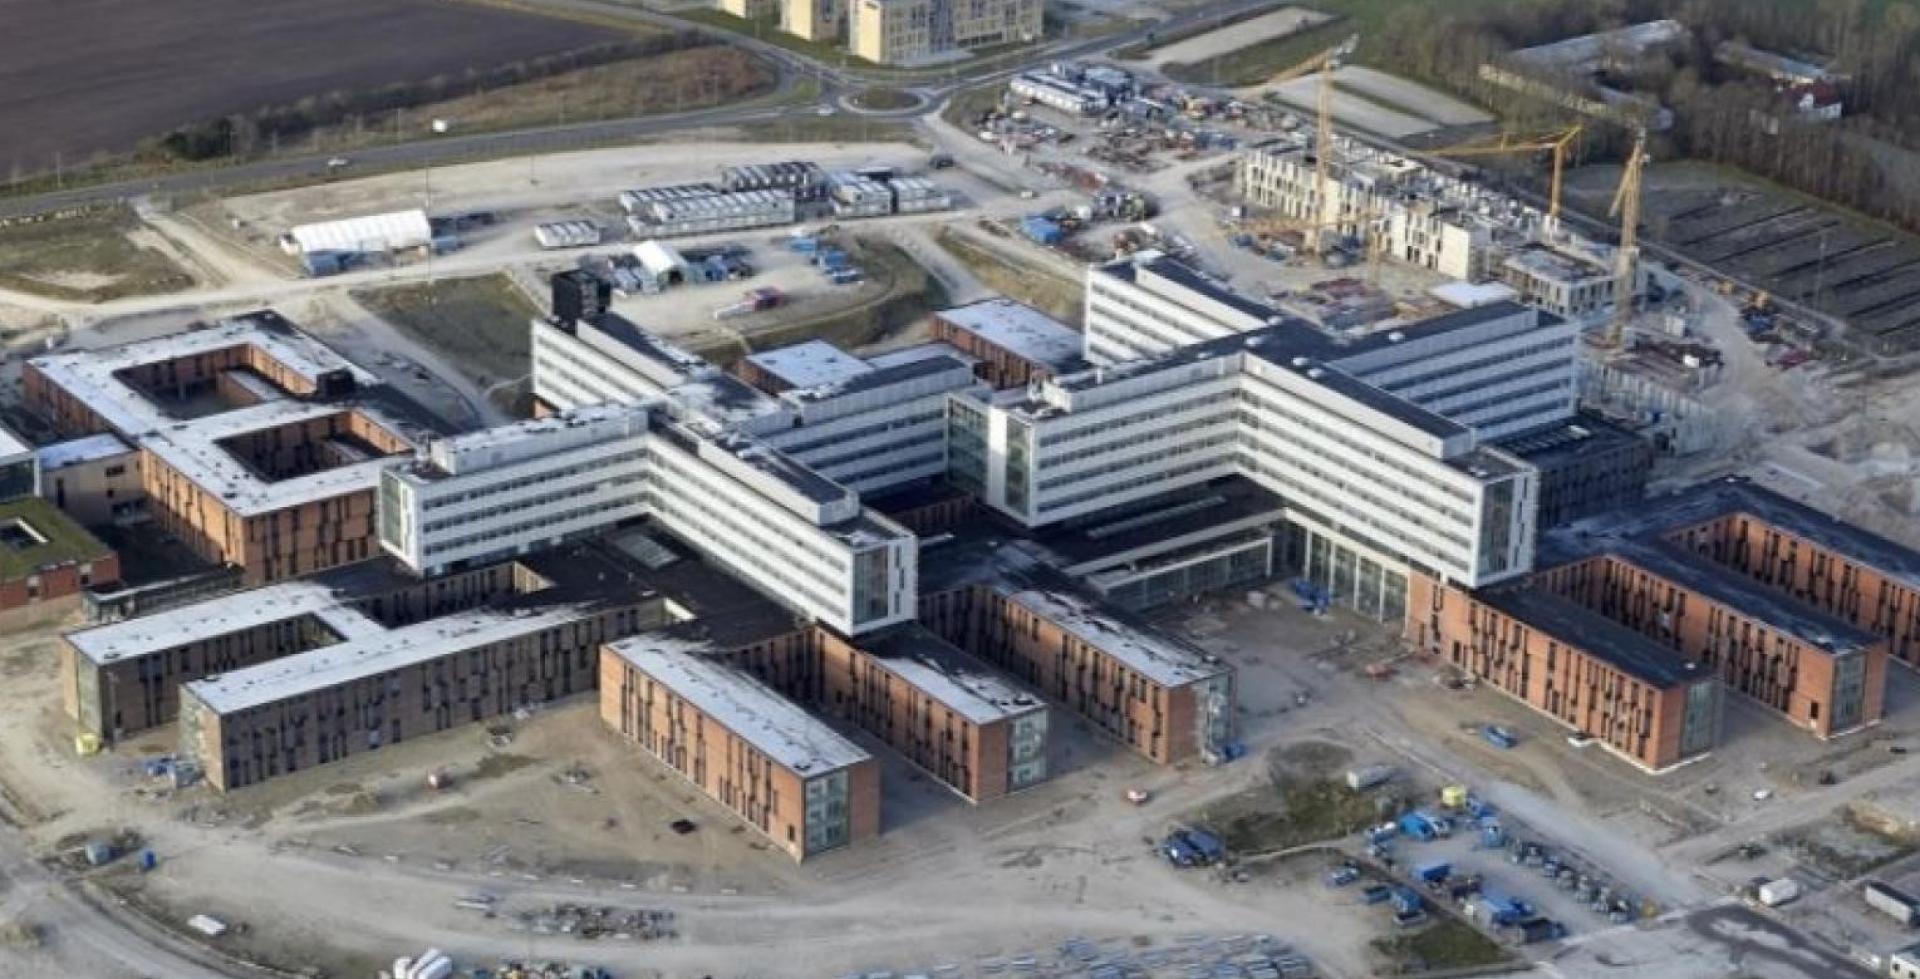 Det 134.500 kvadratmeter store hospitalsbyggeri i Aalborg har efterhånden været undervejs i 10 år. Pressefoto